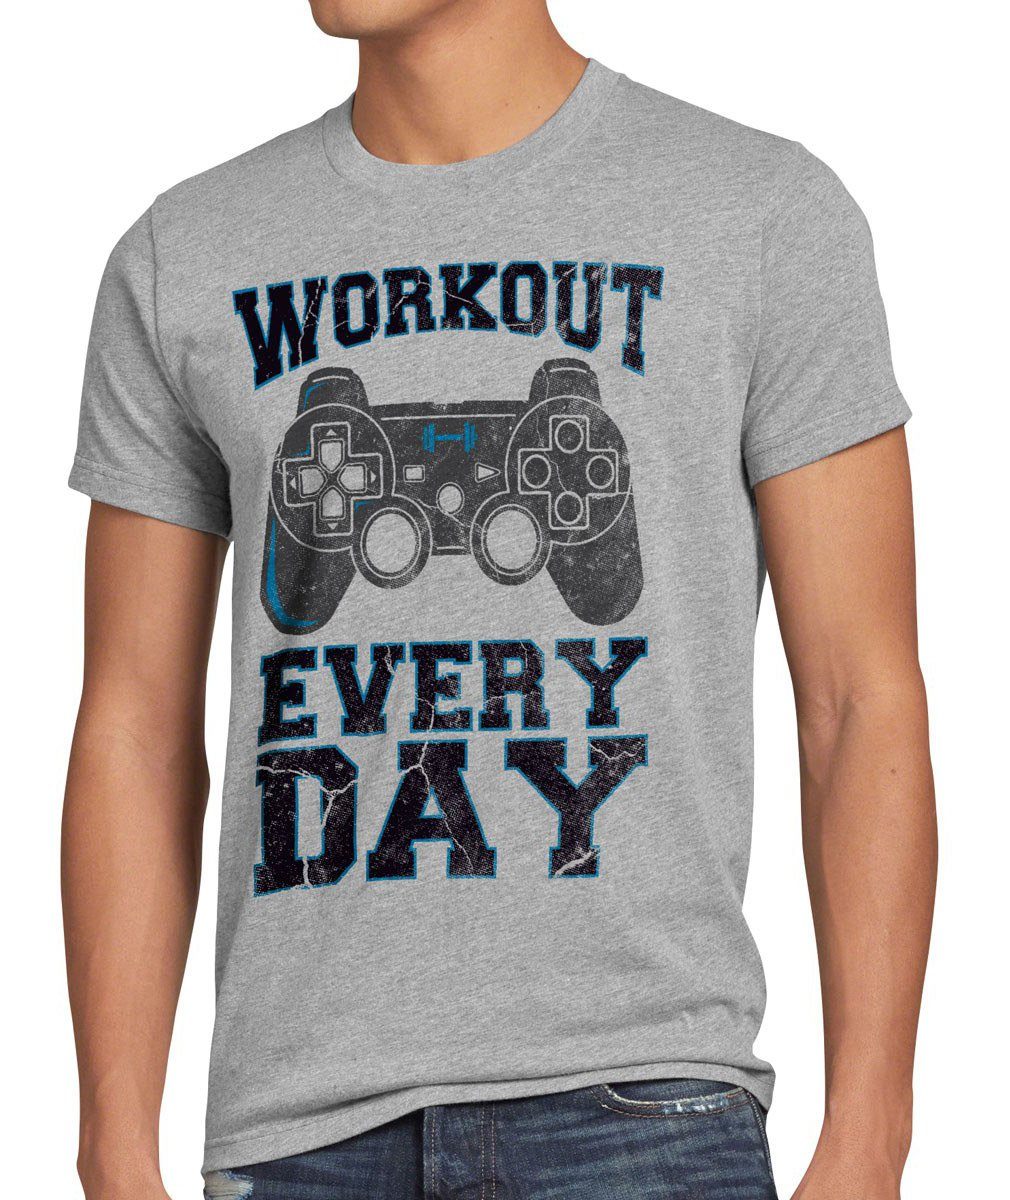 konsole style3 play Print-Shirt Gamer T-Shirt kontroller sport game Workout meliert grau Herren gym station fun